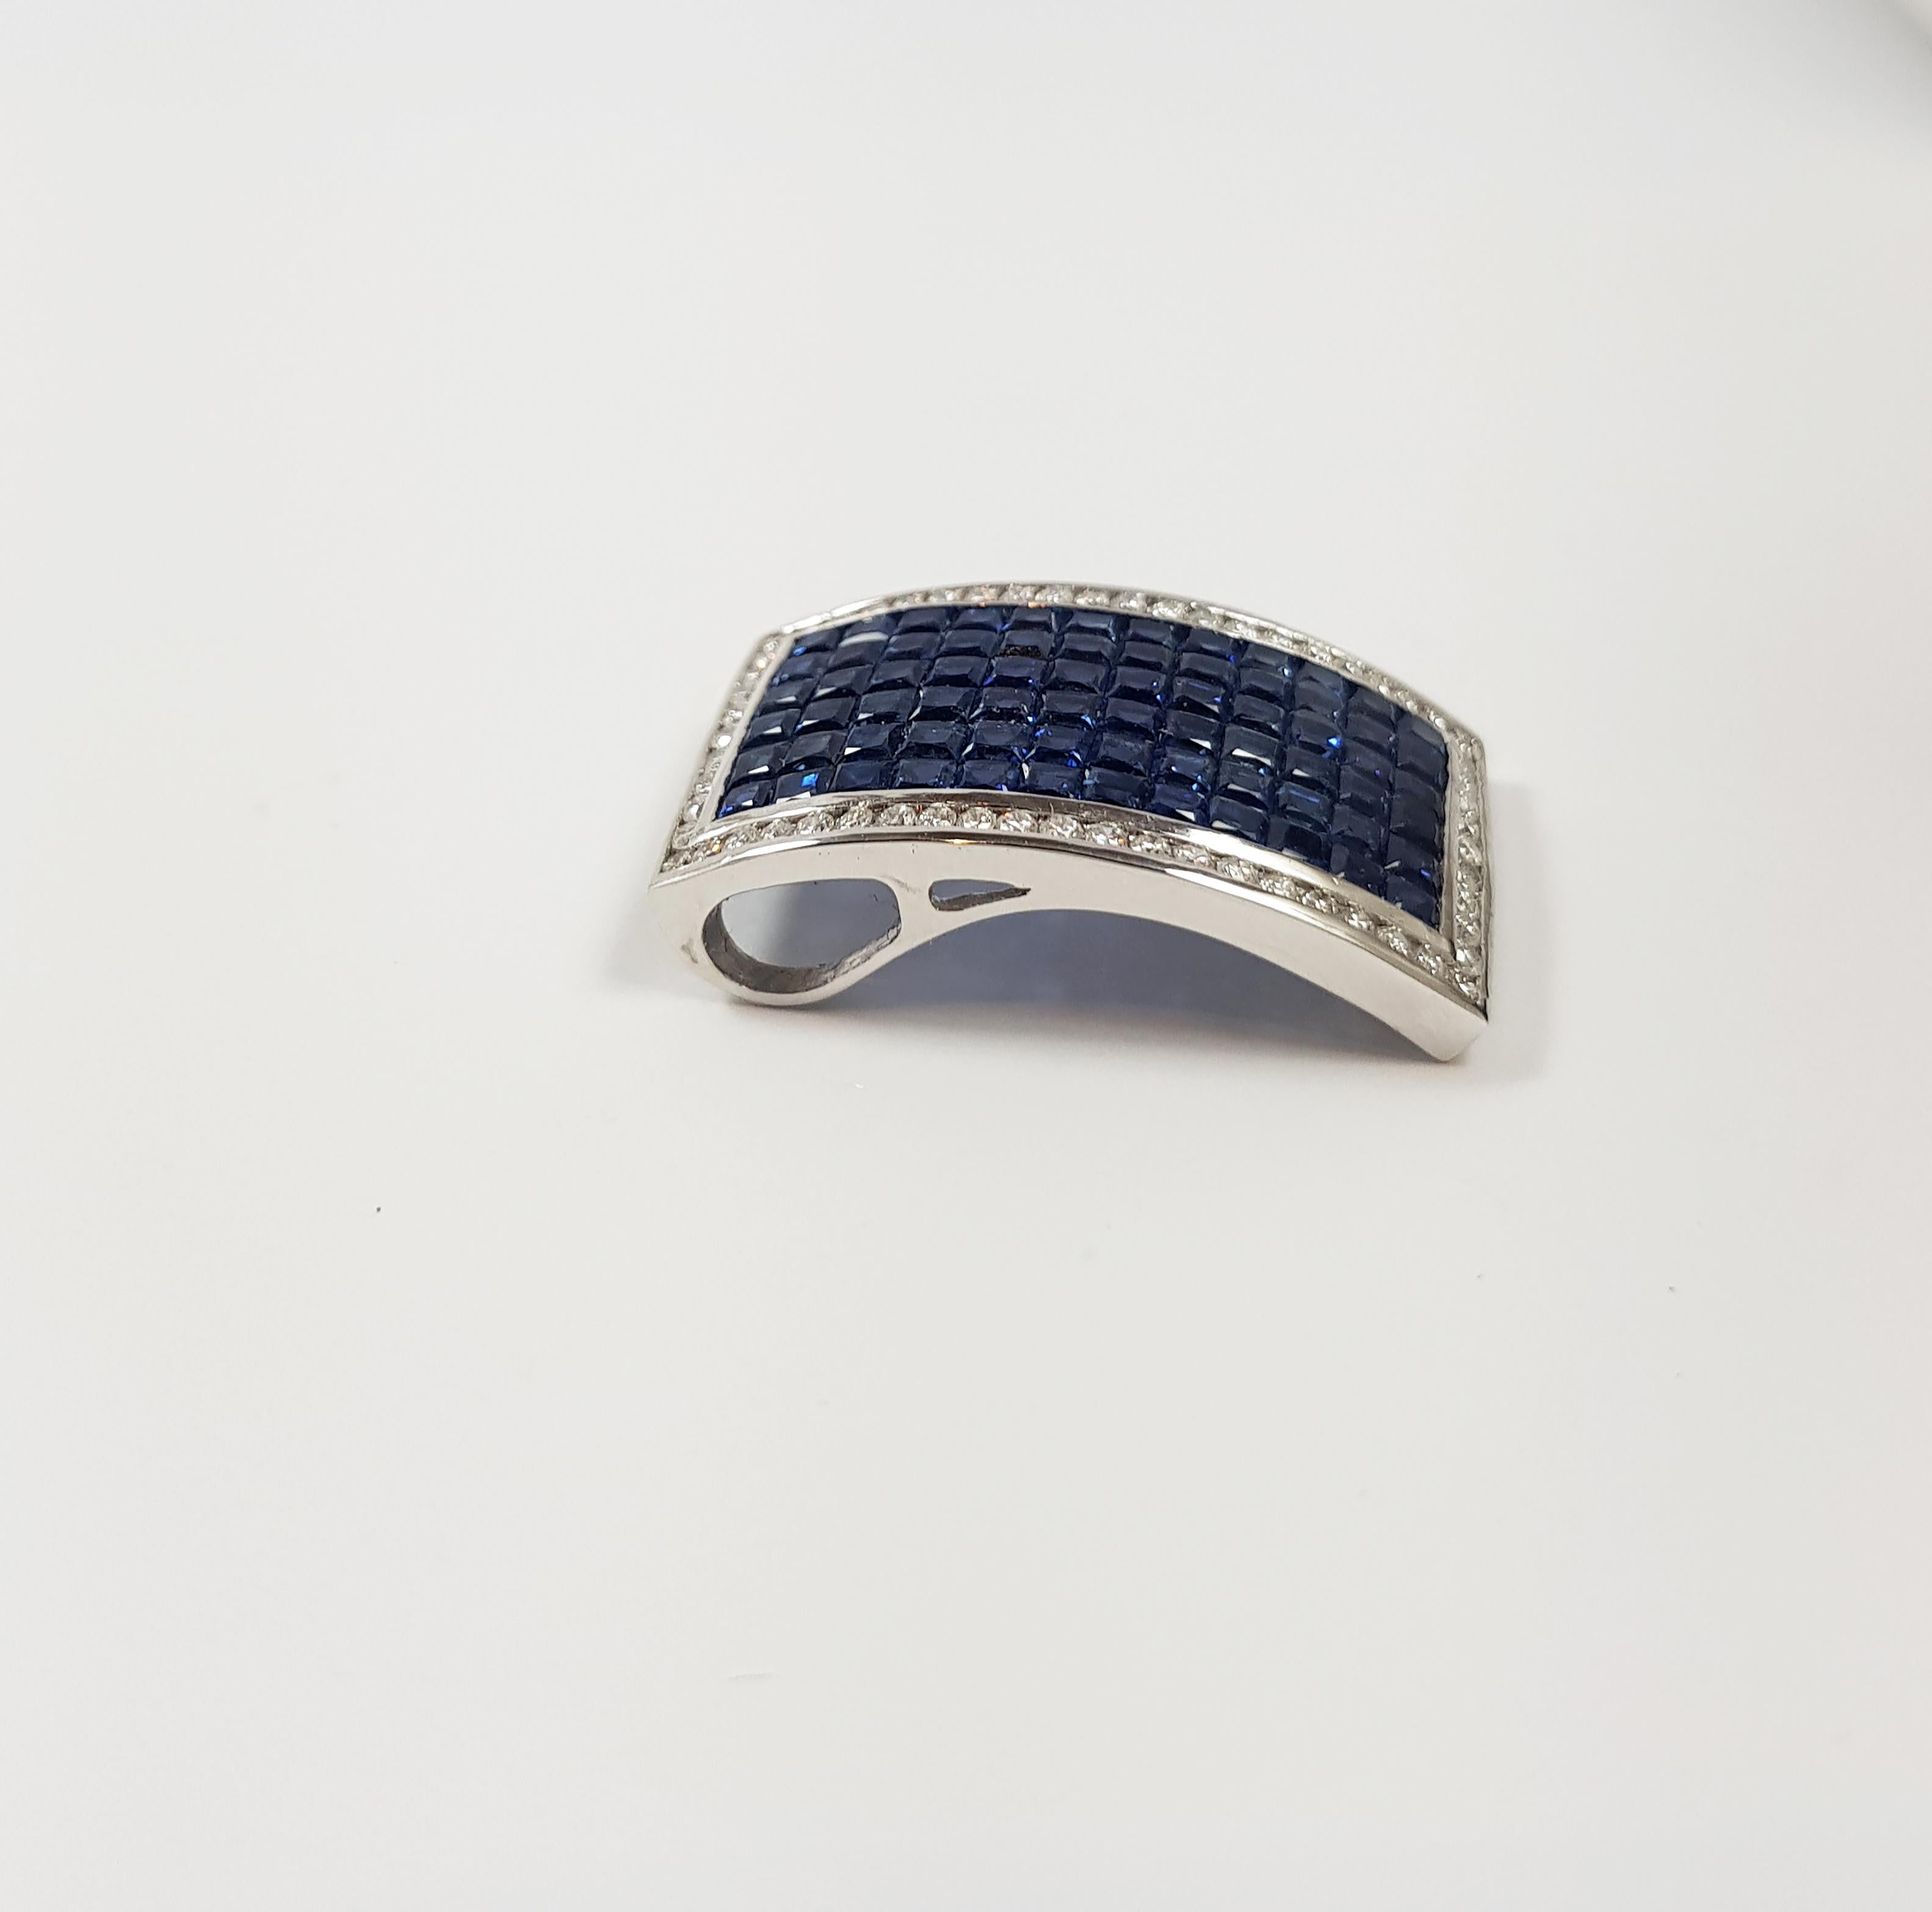 Blue Sapphire 6.35 carat with Diamond 0.60 carat Pendant set in 18 Karat White Gold Settings
(chain not included)

Width: 1.7 cm
Length: 2.8 cm 

